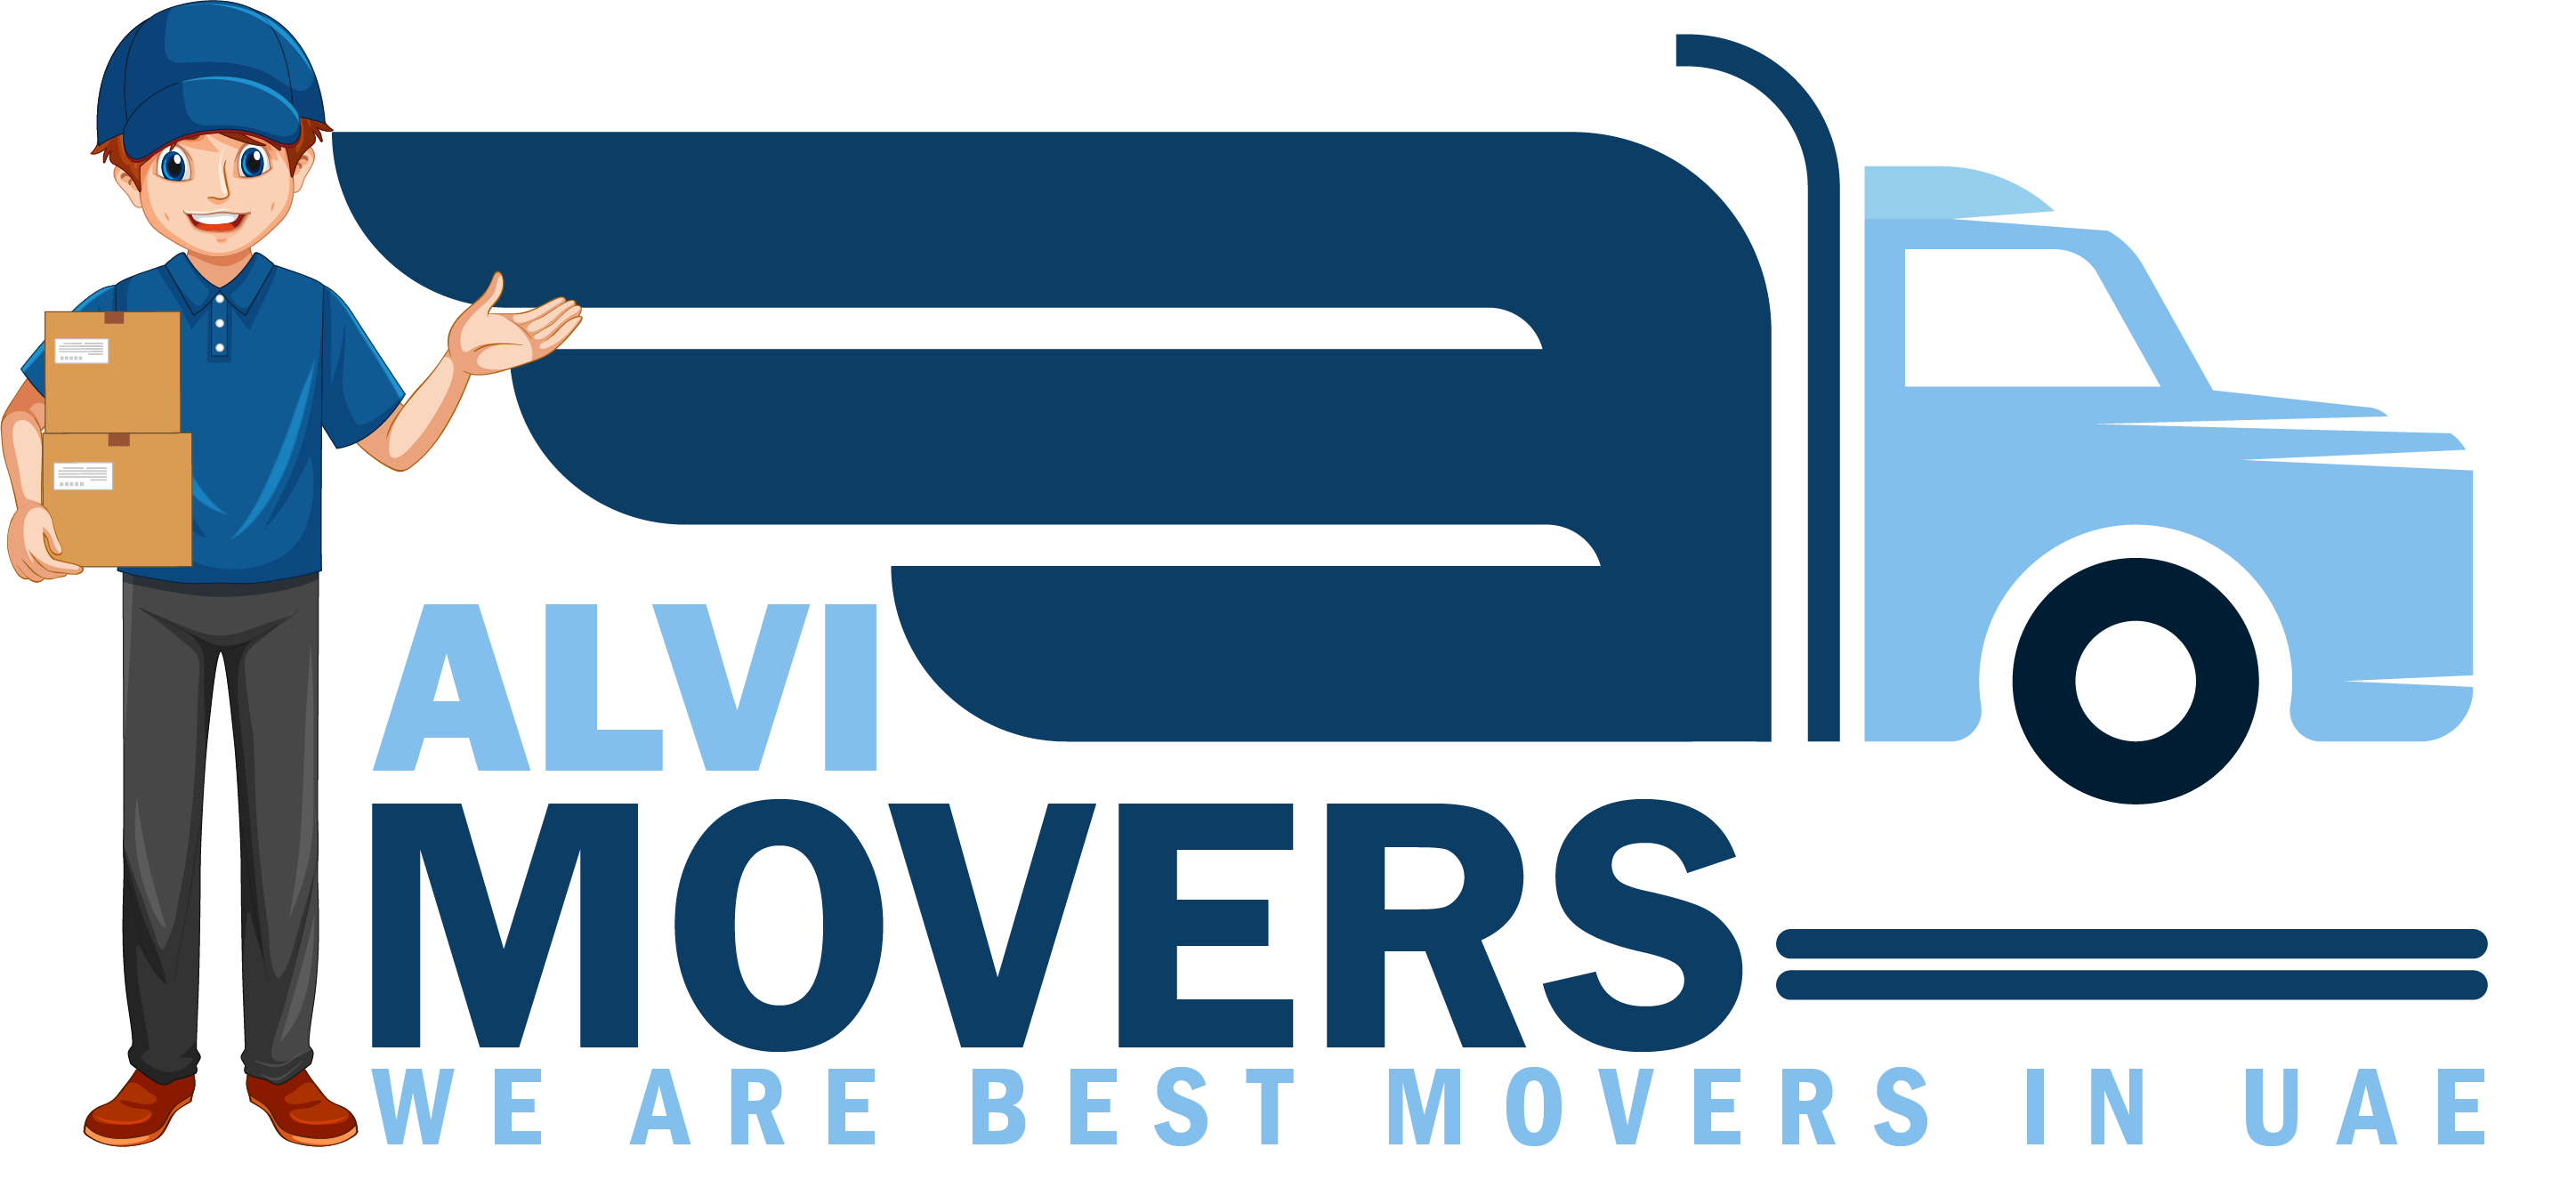 alvi movers logo png